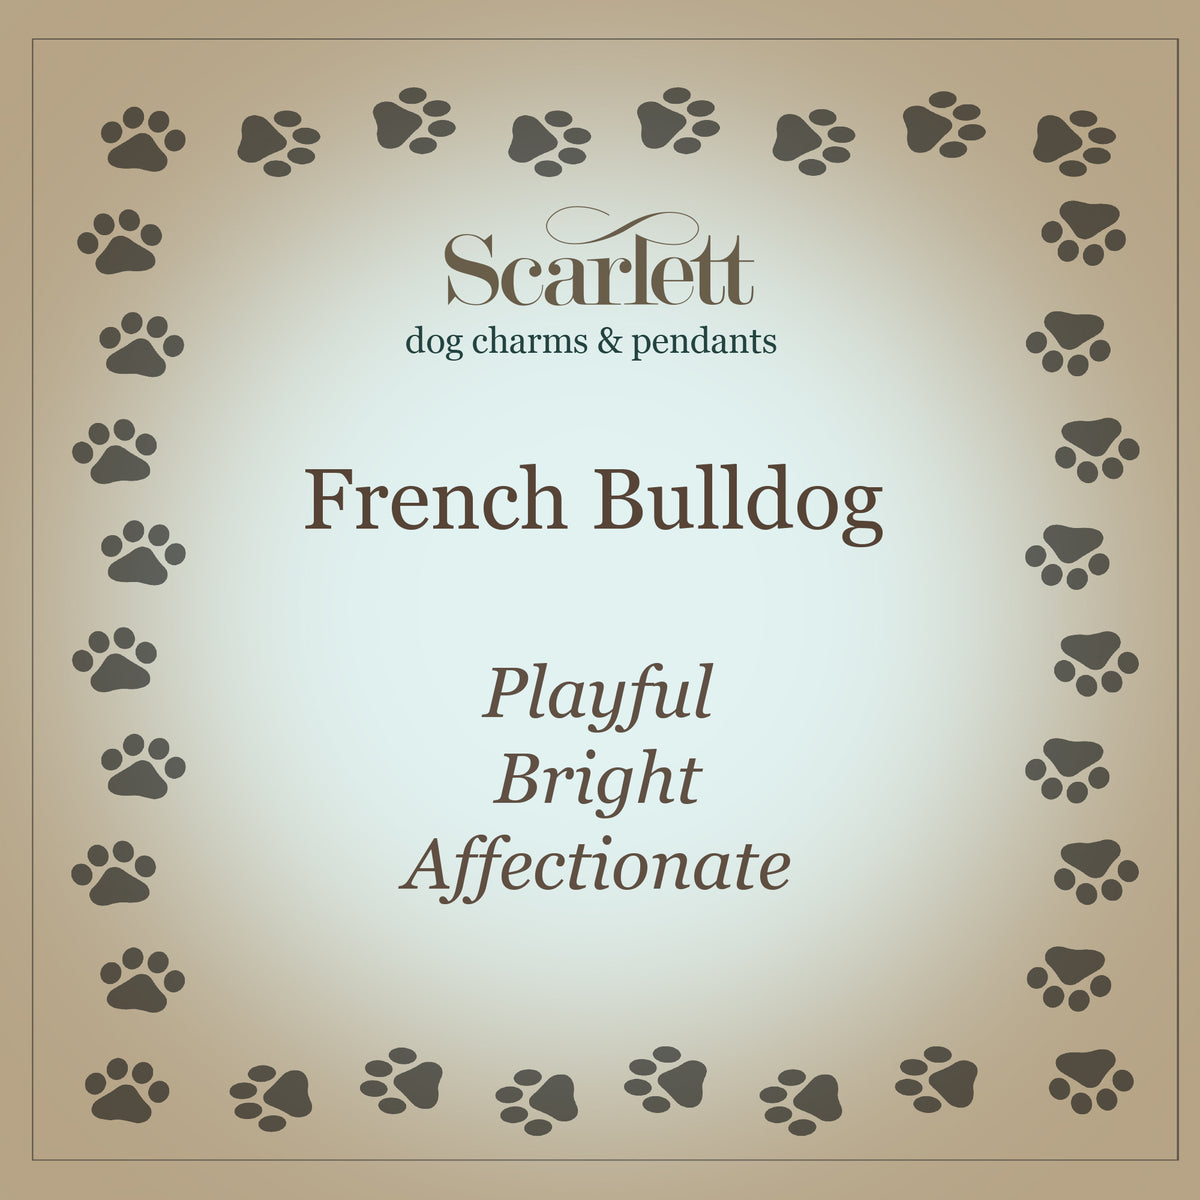 French Bulldog Solid Gold Dog Charm